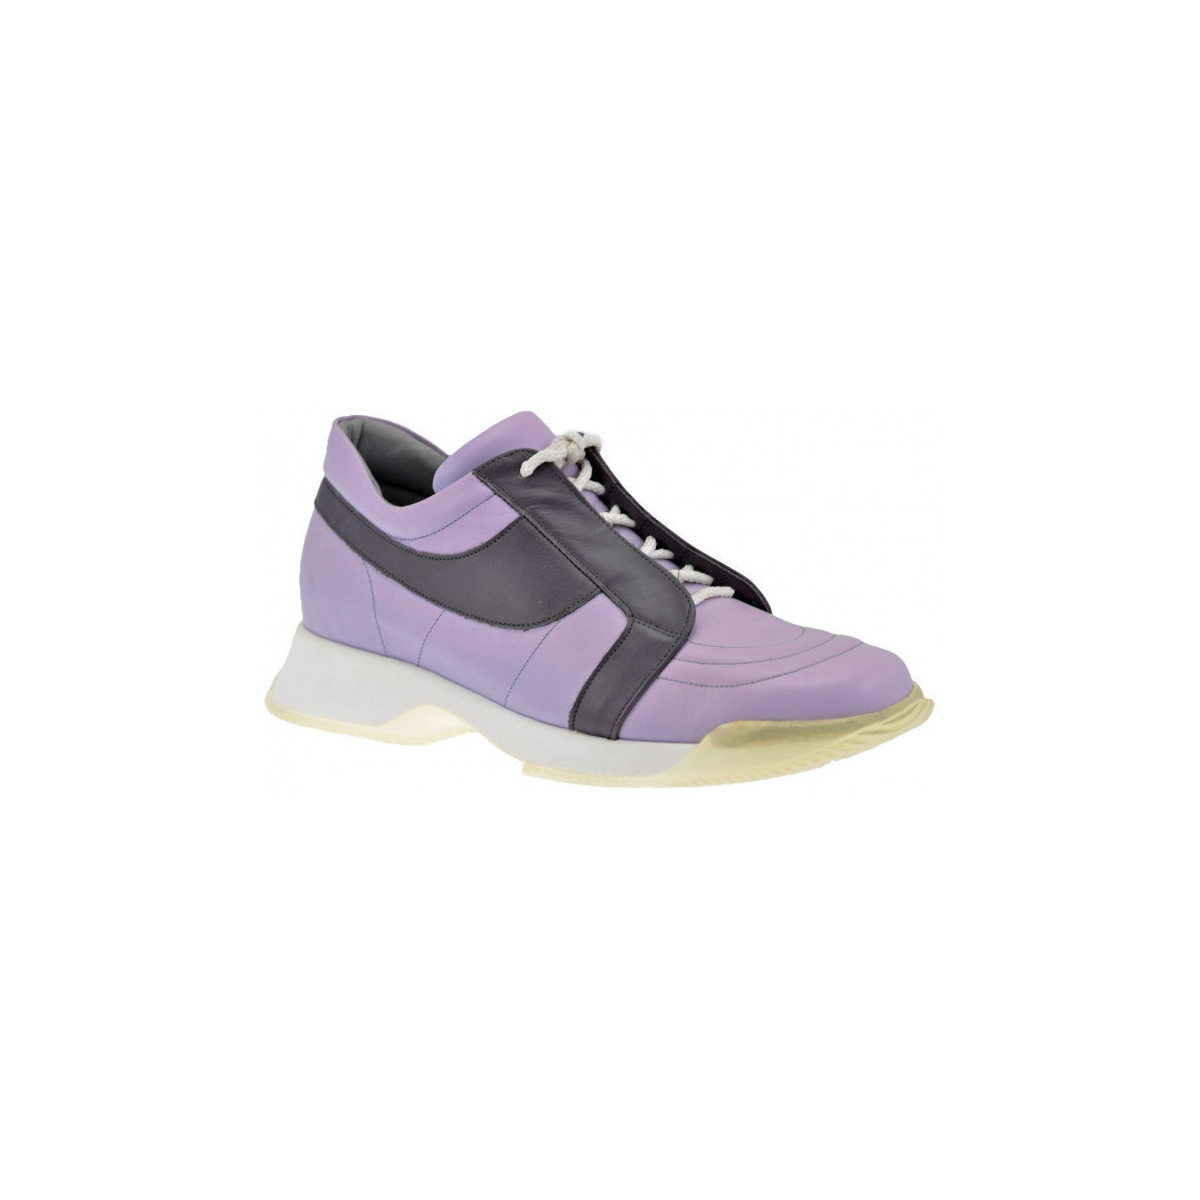 Schoenen Dames Sneakers Janet&Janet Lipari Sneakers Casual Violet